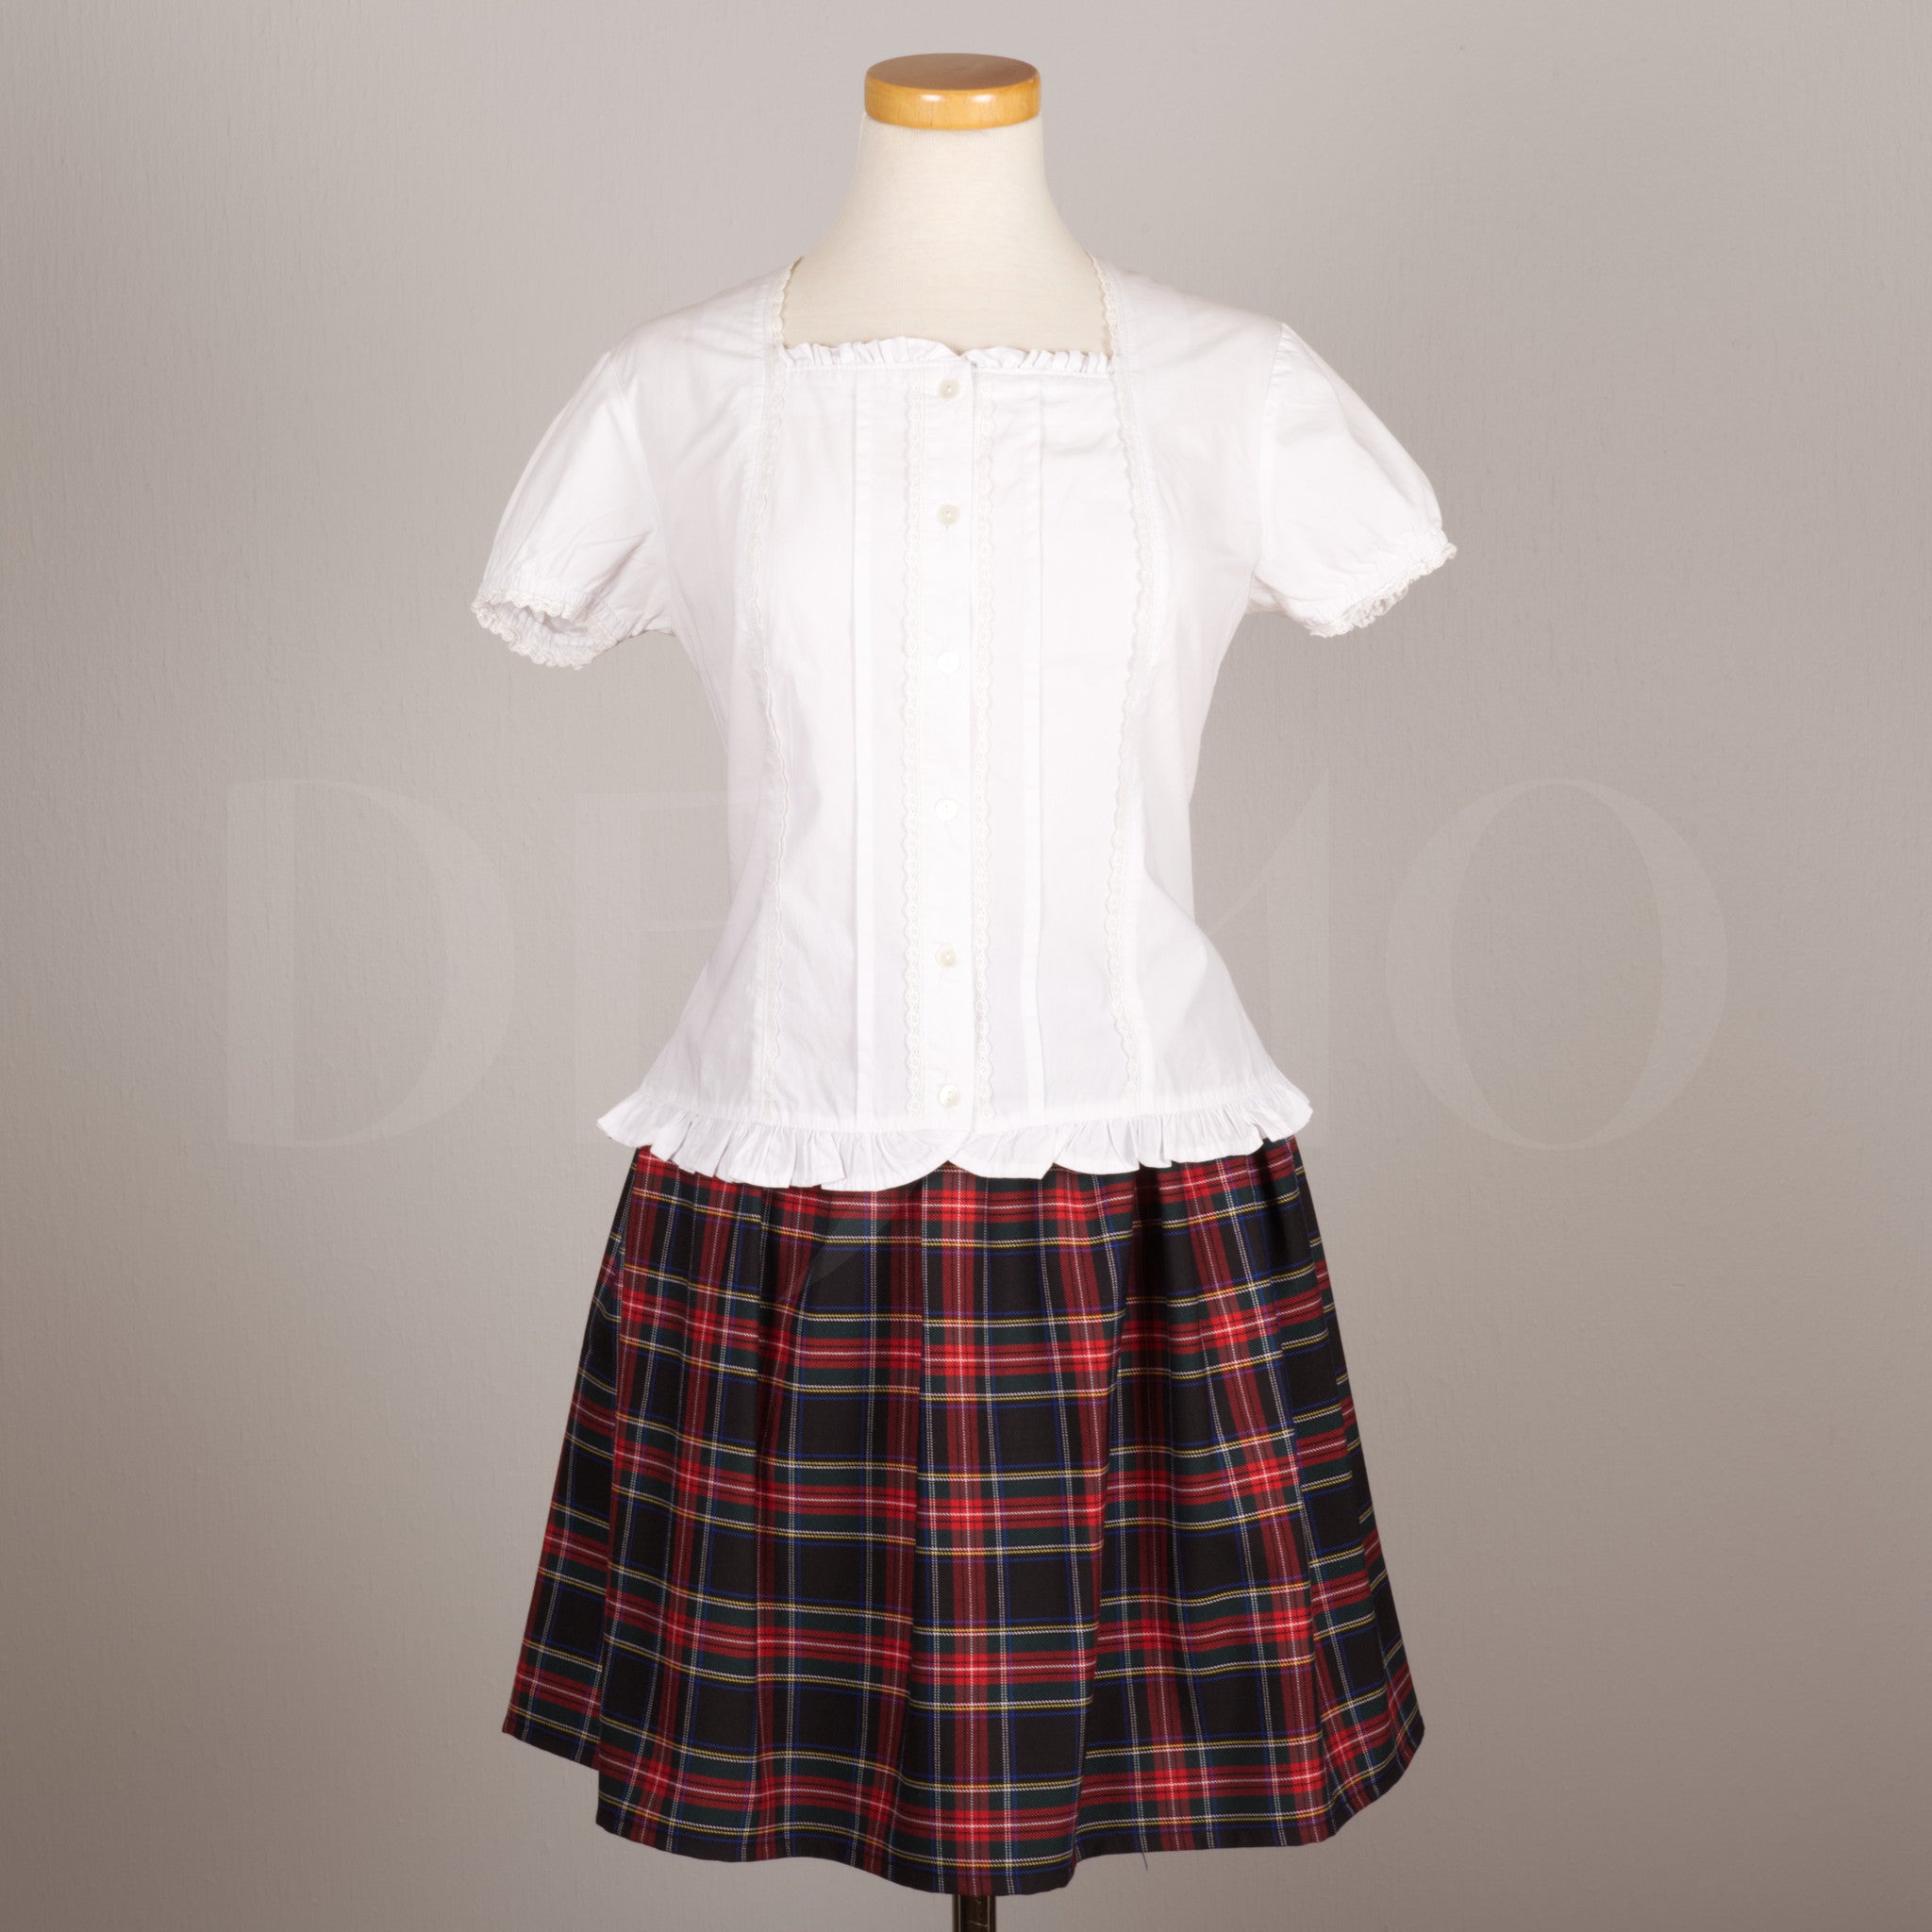 Skotskrutig kjol med elastisk midja